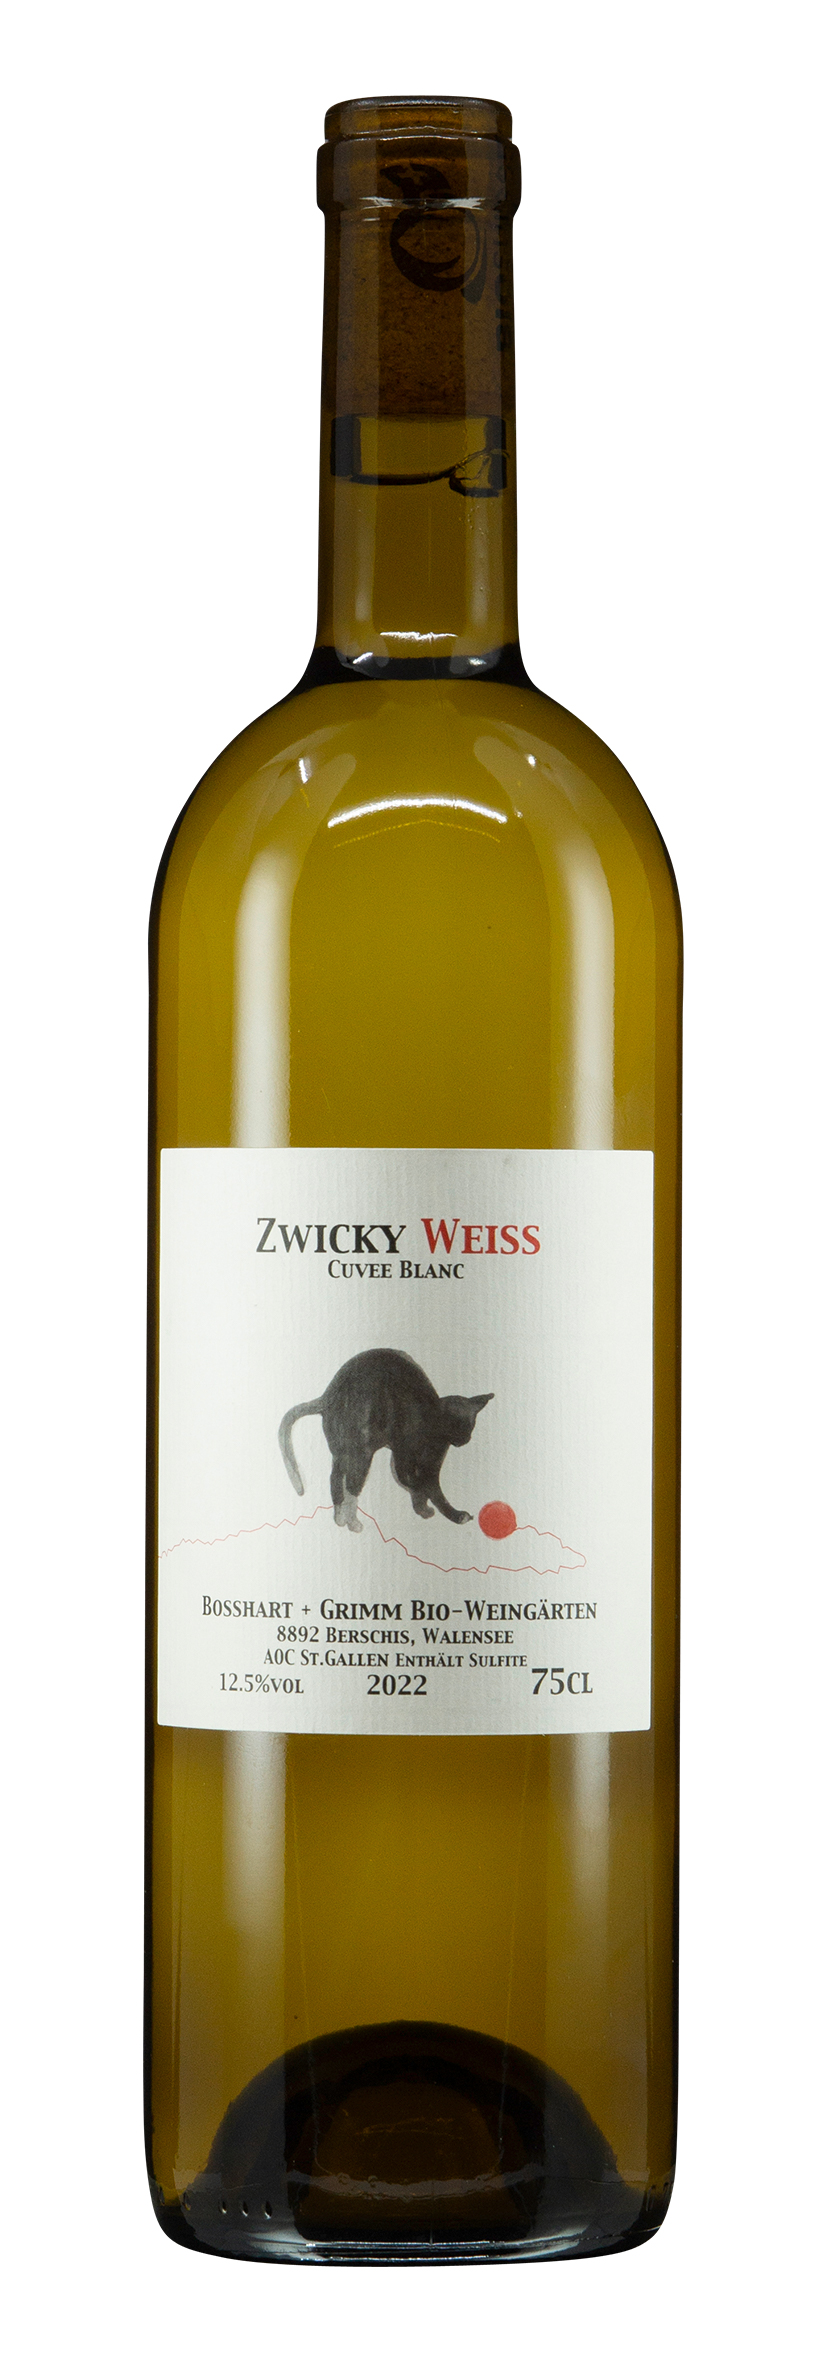 St. Gallen AOC Cuvée blanc Zwicky Weiss 2022